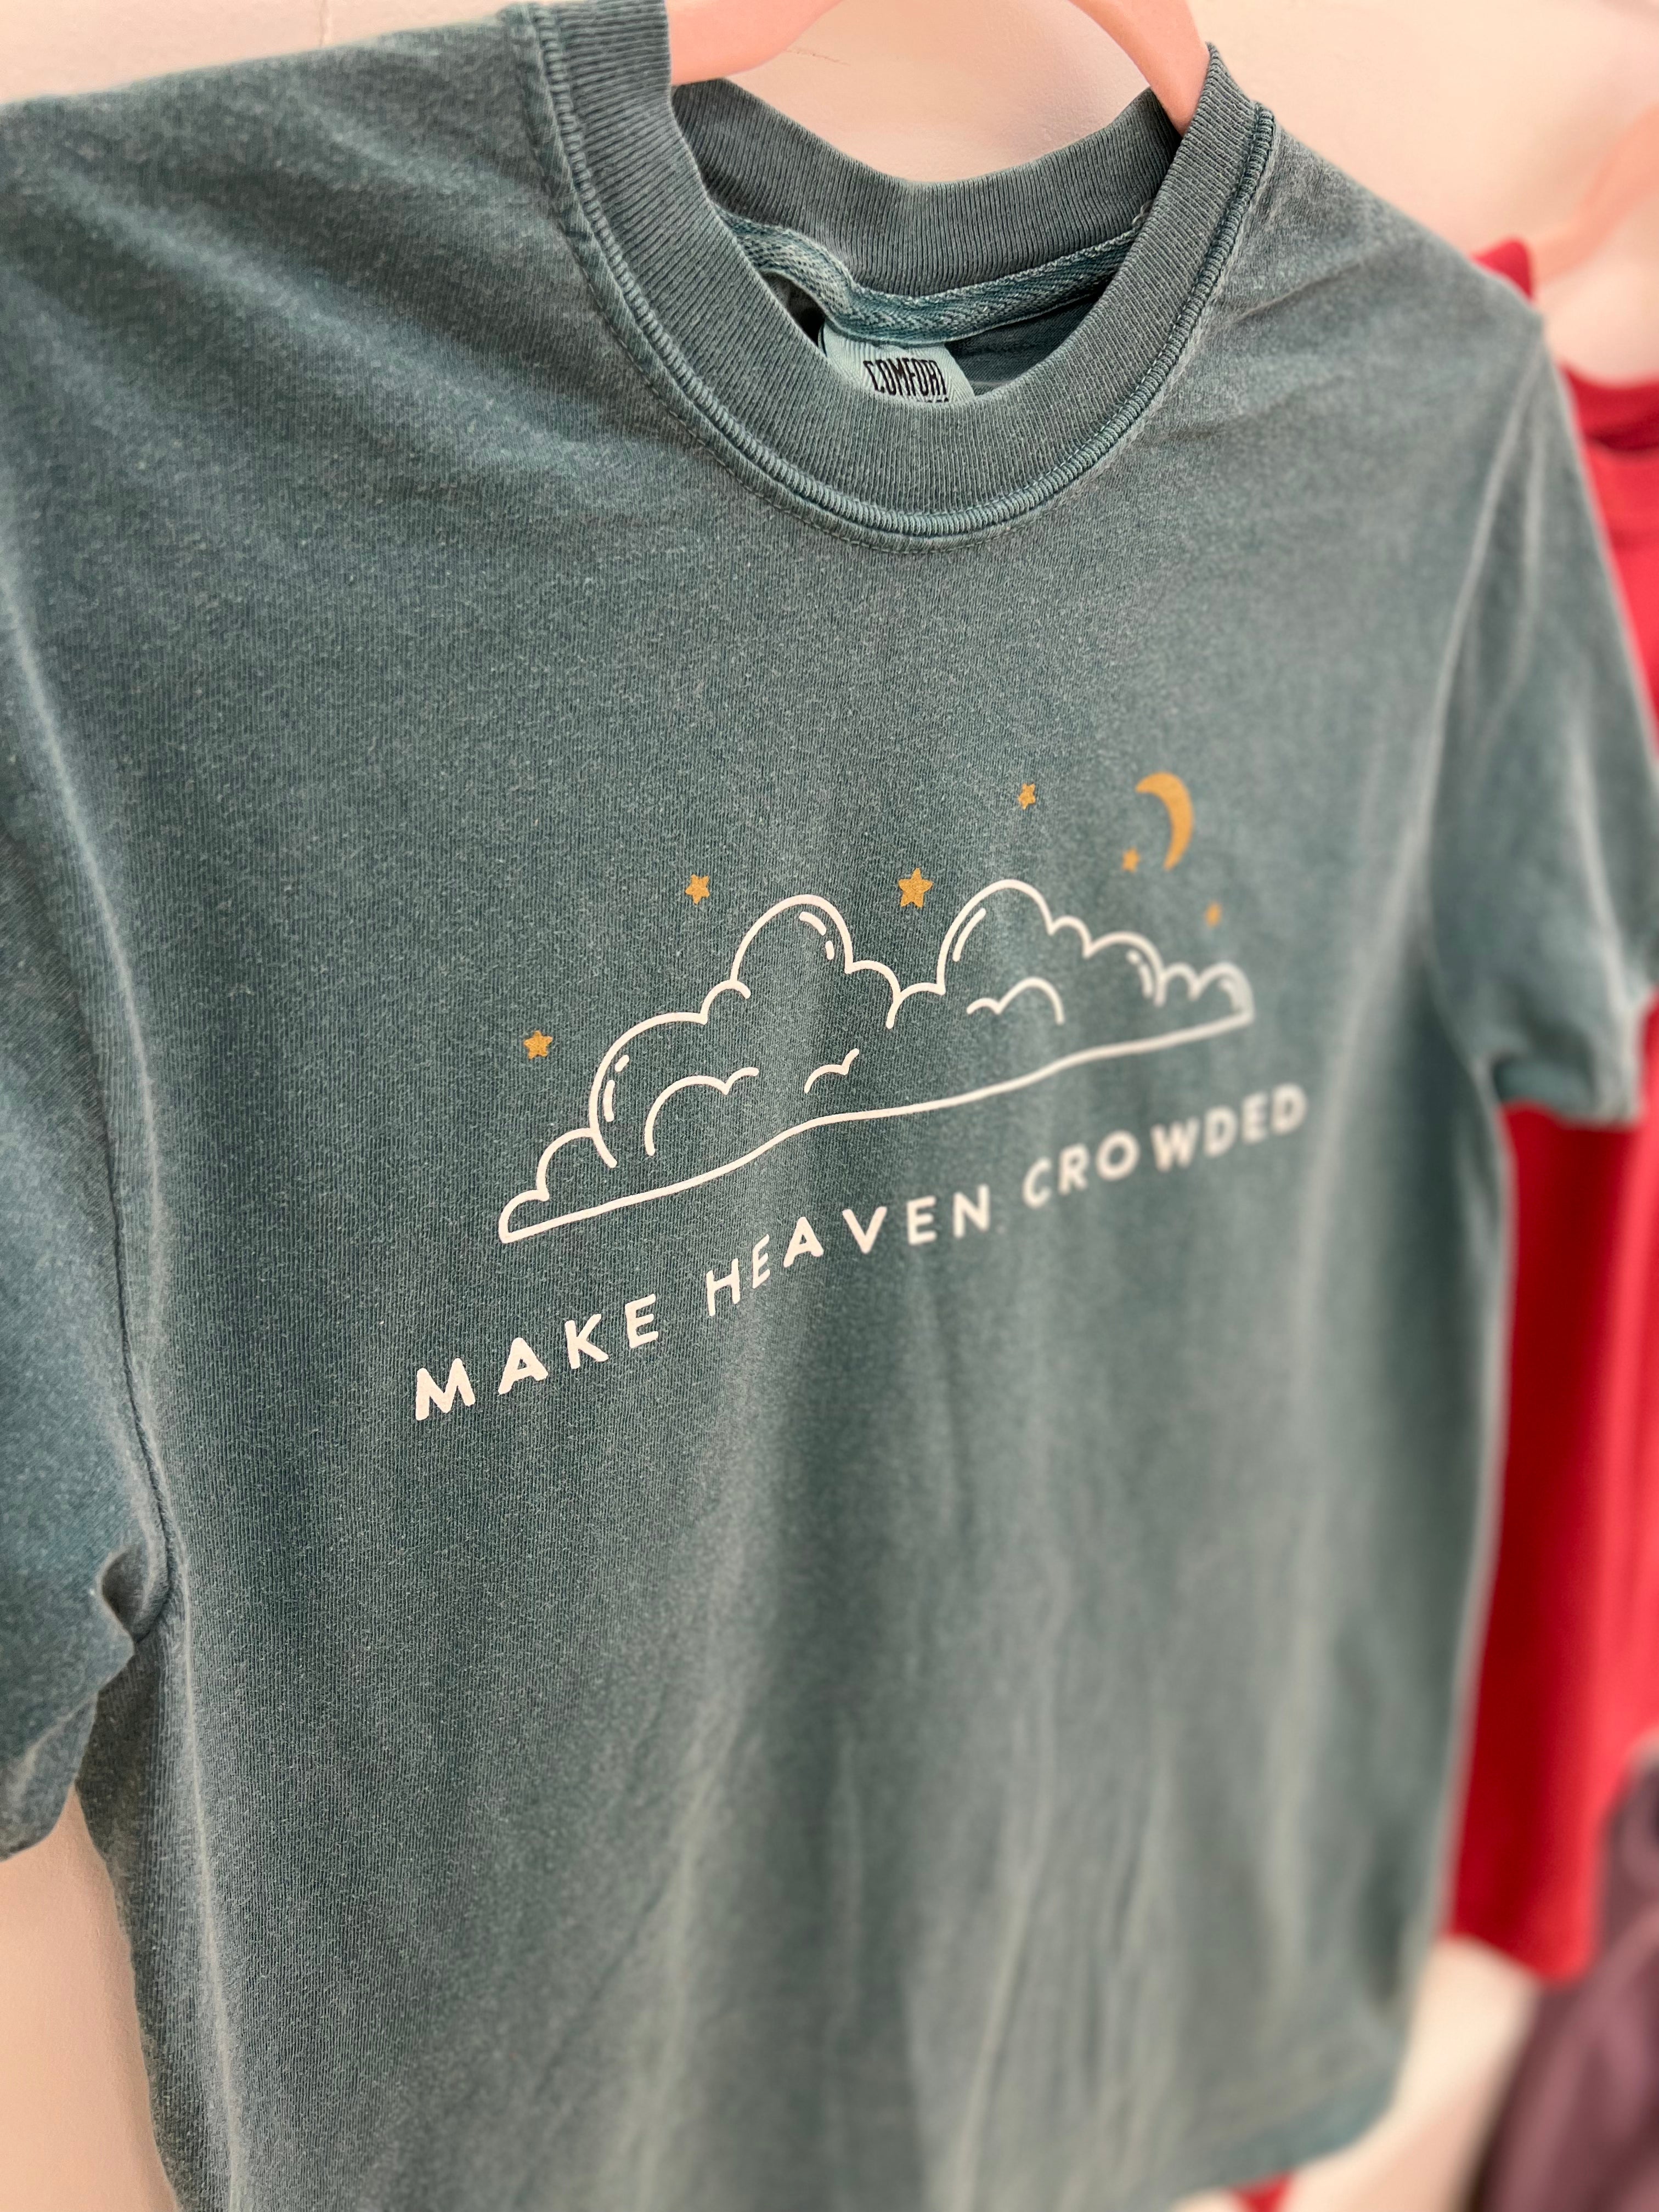 Make Heaven Crowded - PREORDER (SHIP DATE START 2/13)